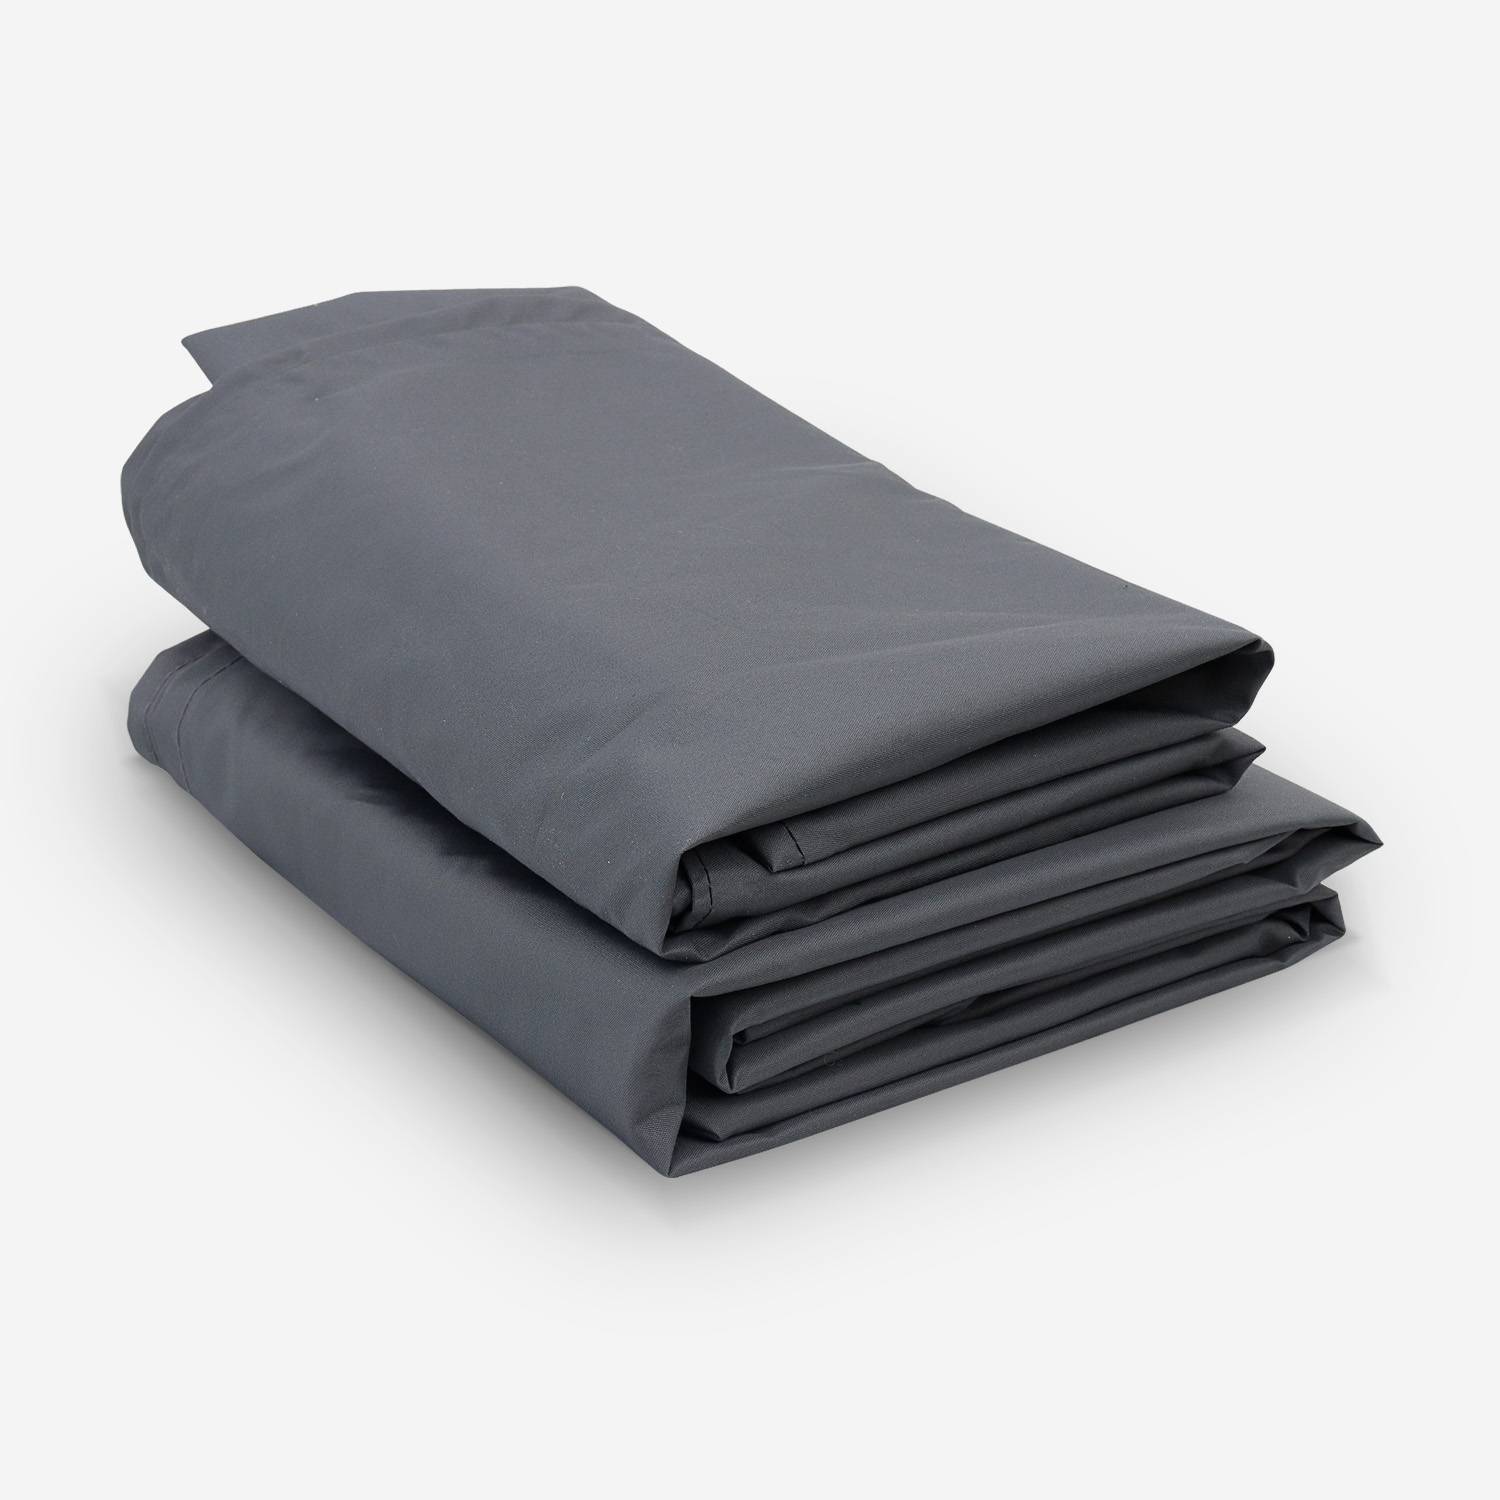 Protective covers for Alba, Caligari, Romini and Vinci garden sofa set, dark grey. Water-resistant Photo2